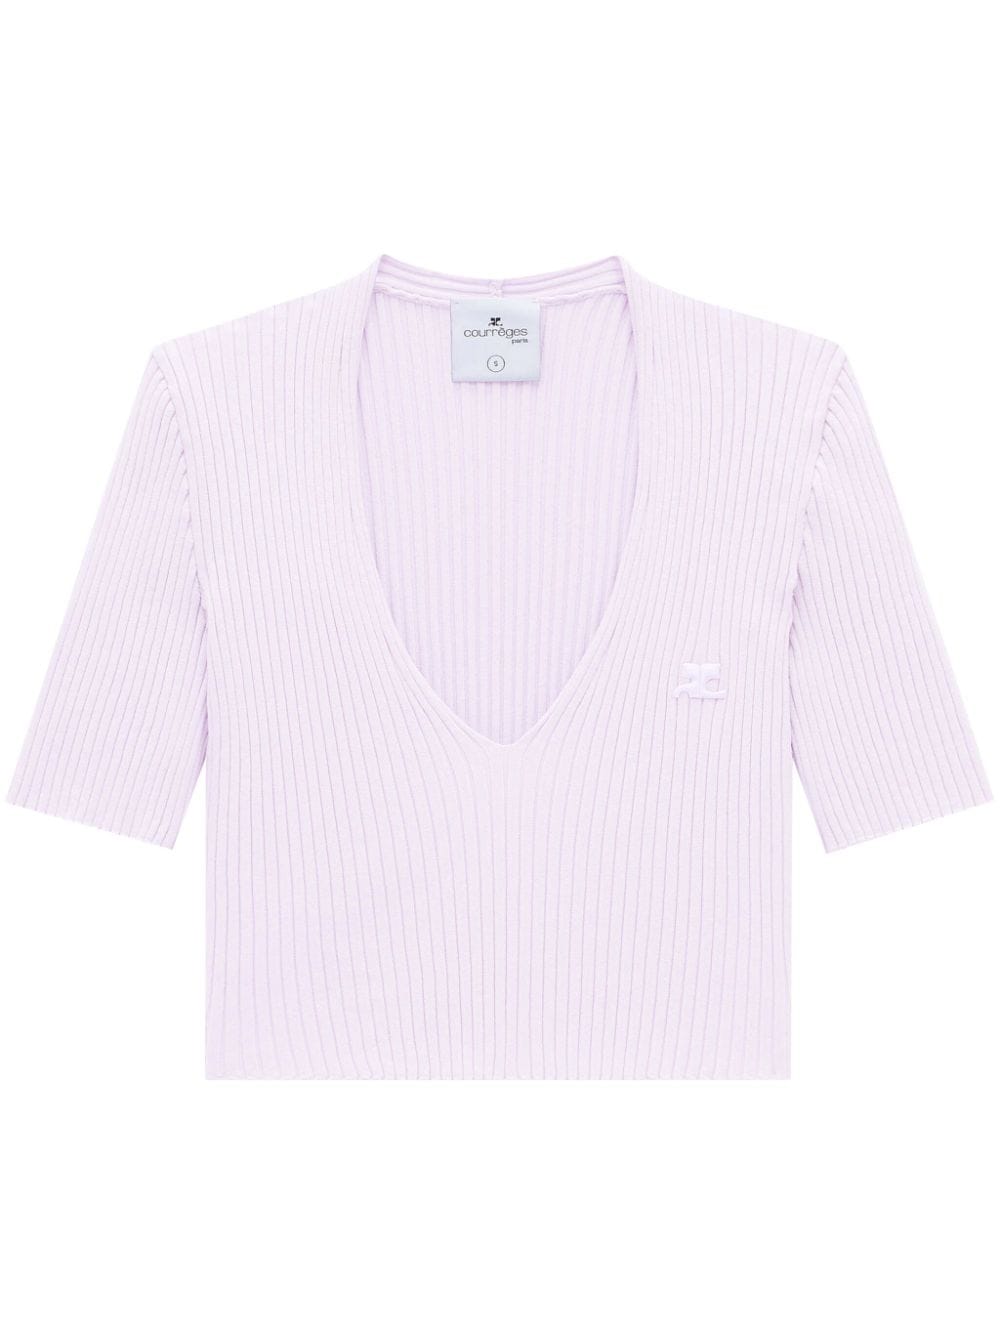 Courrèges ribbed knit V-neck top - Pink von Courrèges